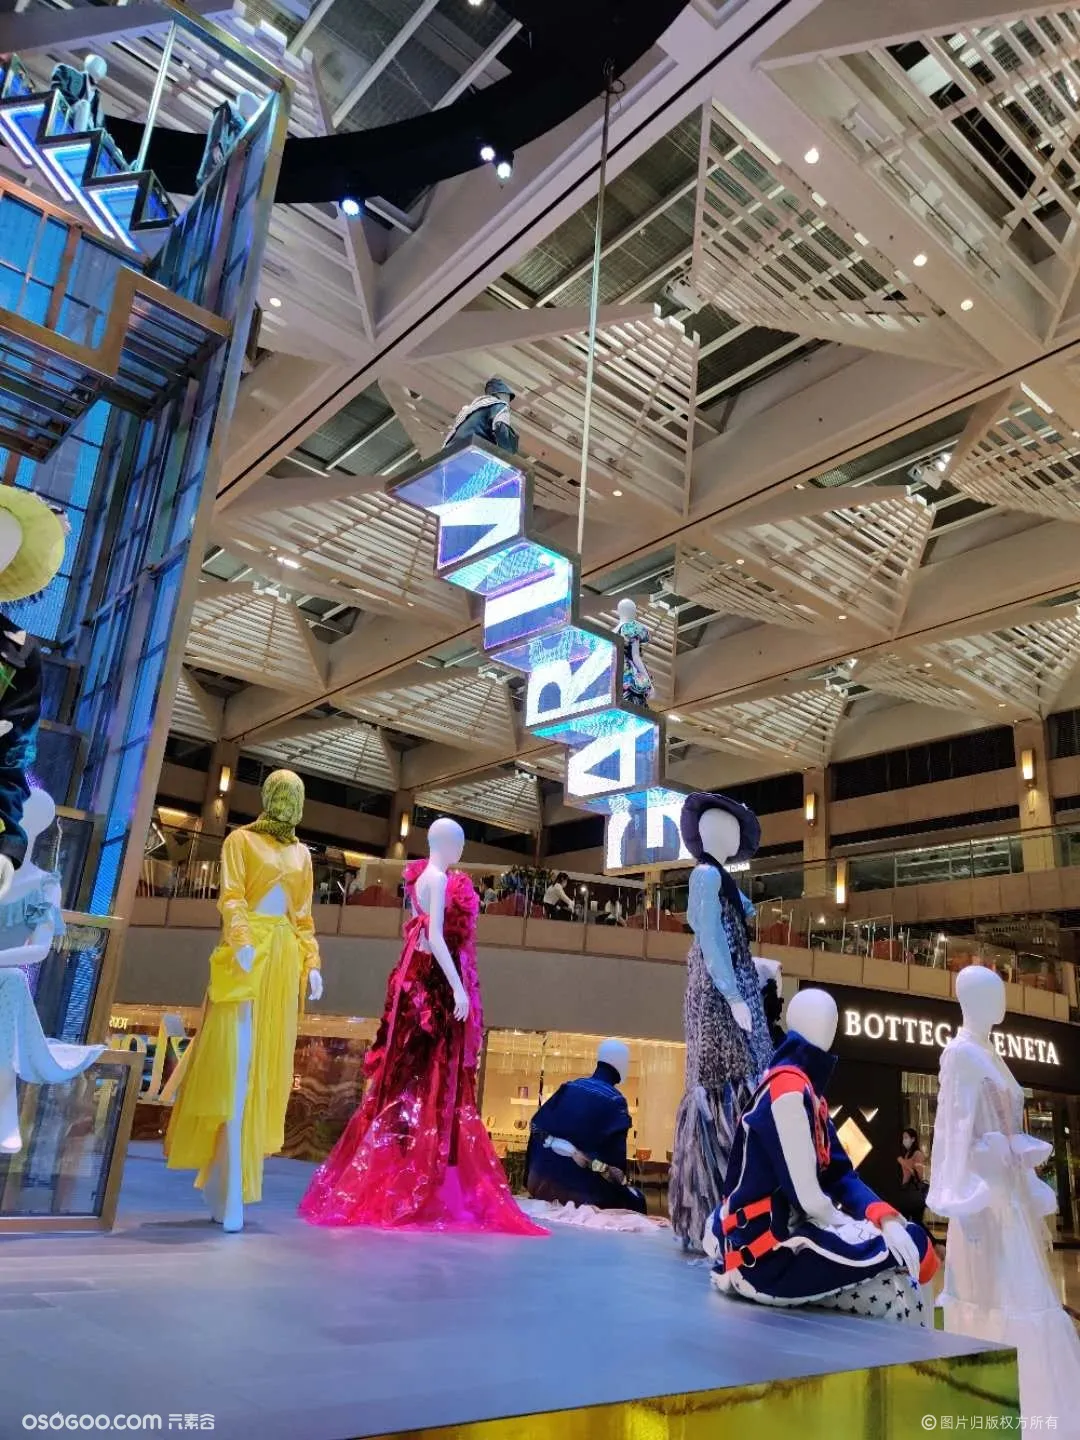 香港JUXTAPOSED 2020时装展览